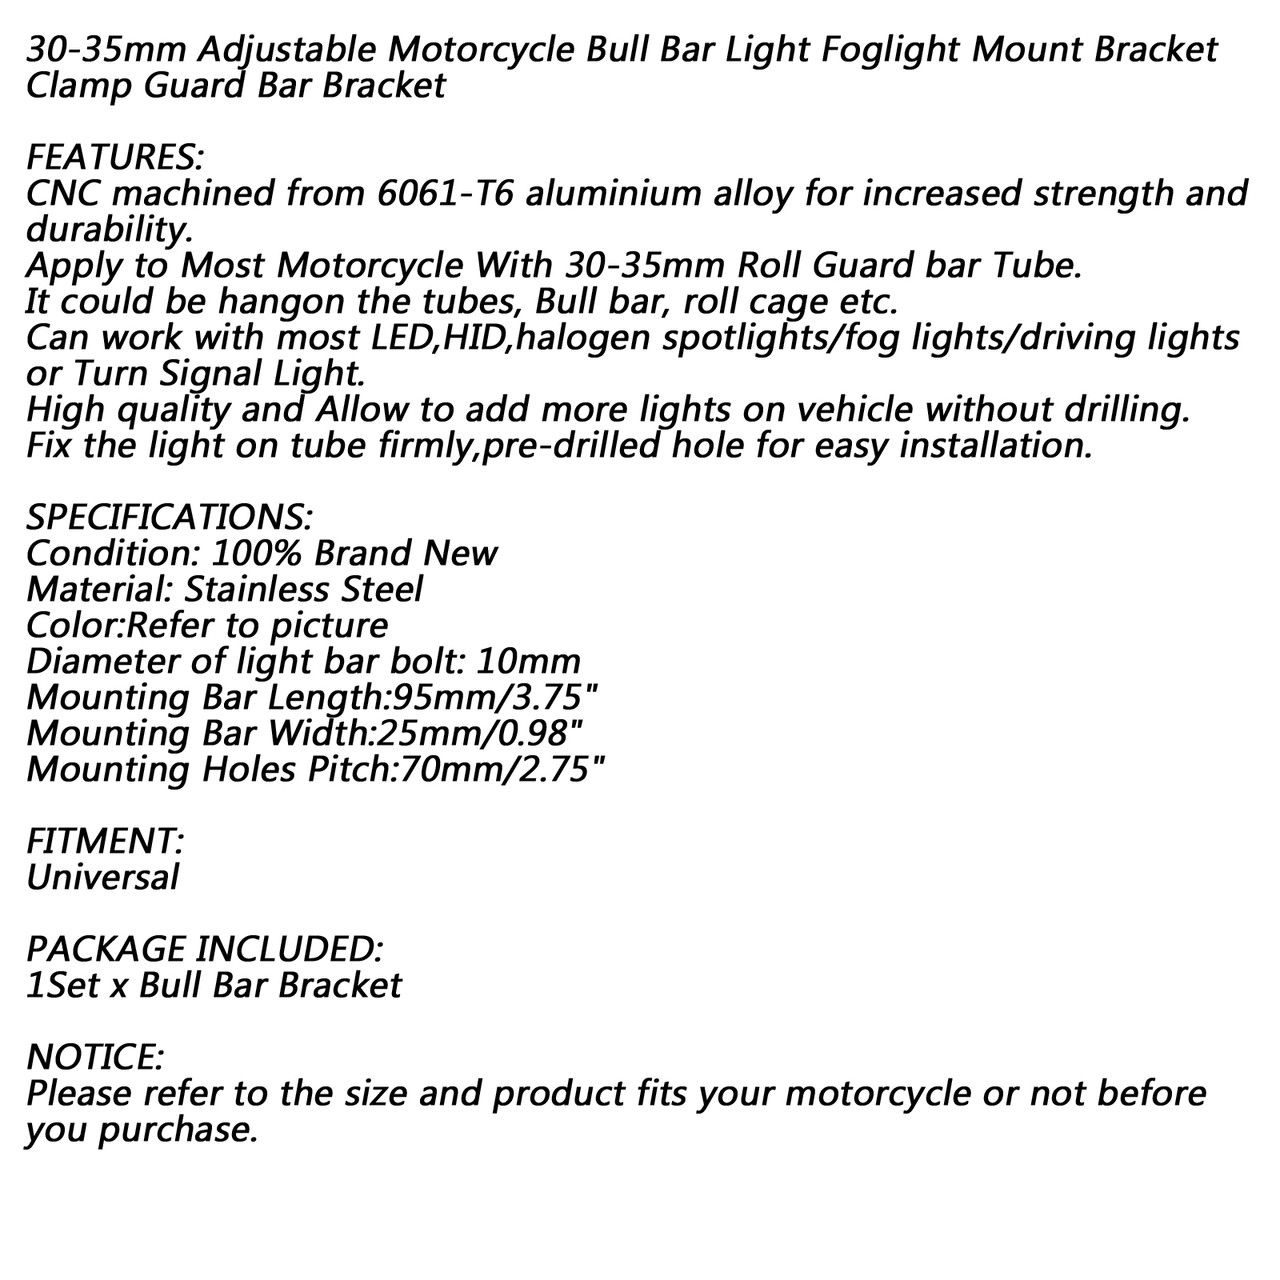 30-35mm Adjustable Bull Bar Light Foglight Mount Bracket Clamp Black